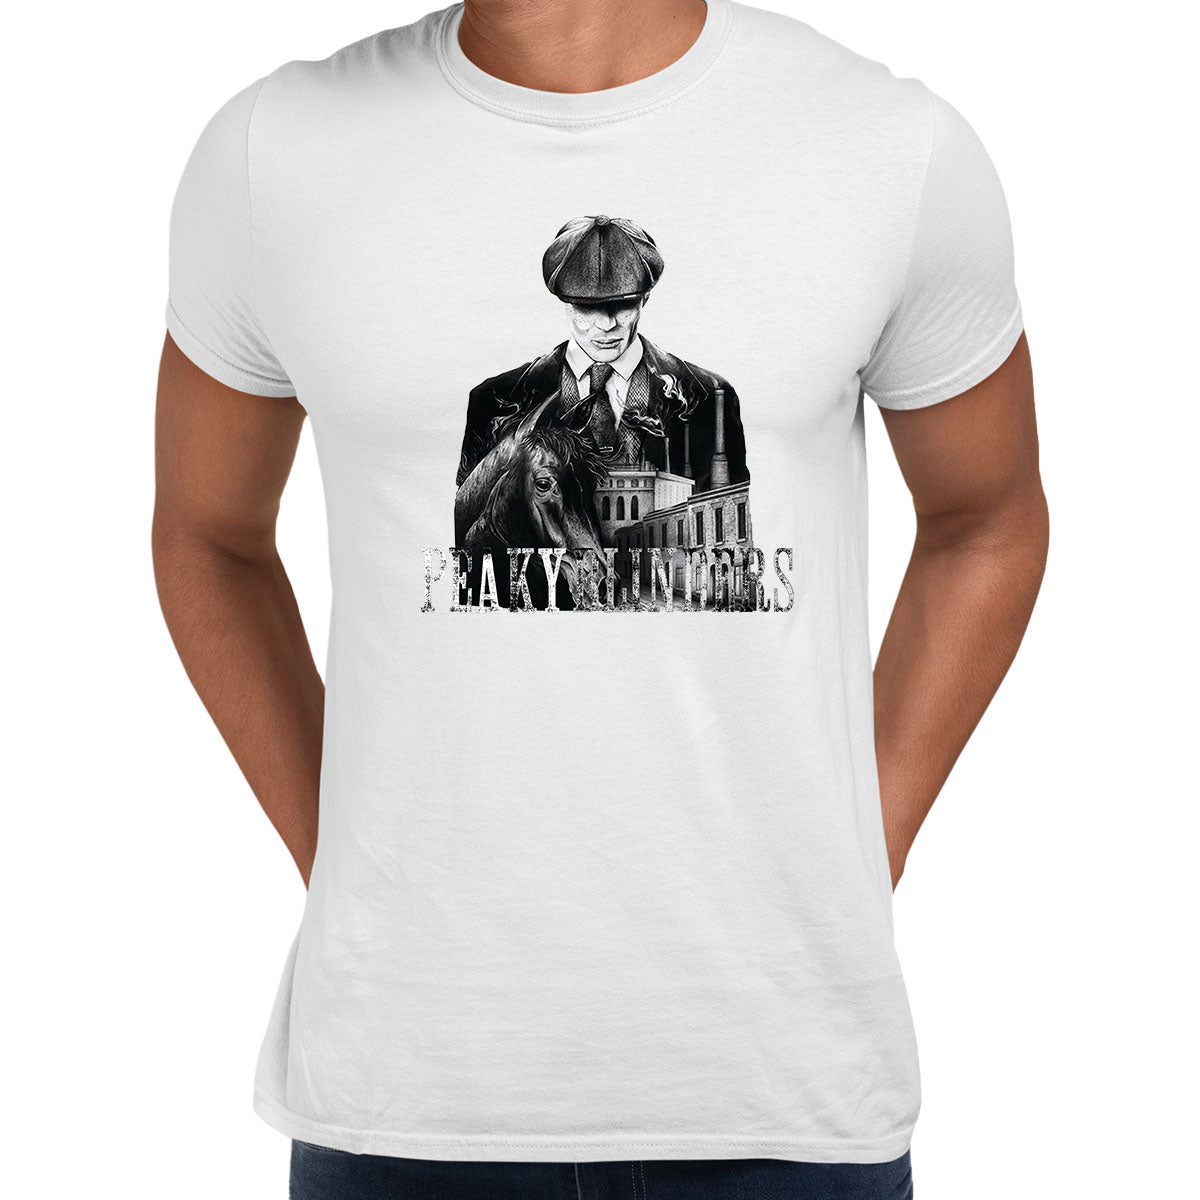 This Peaky Blinders Tommy Shelby Birmingham Adult T-shirt - Kuzi Tees